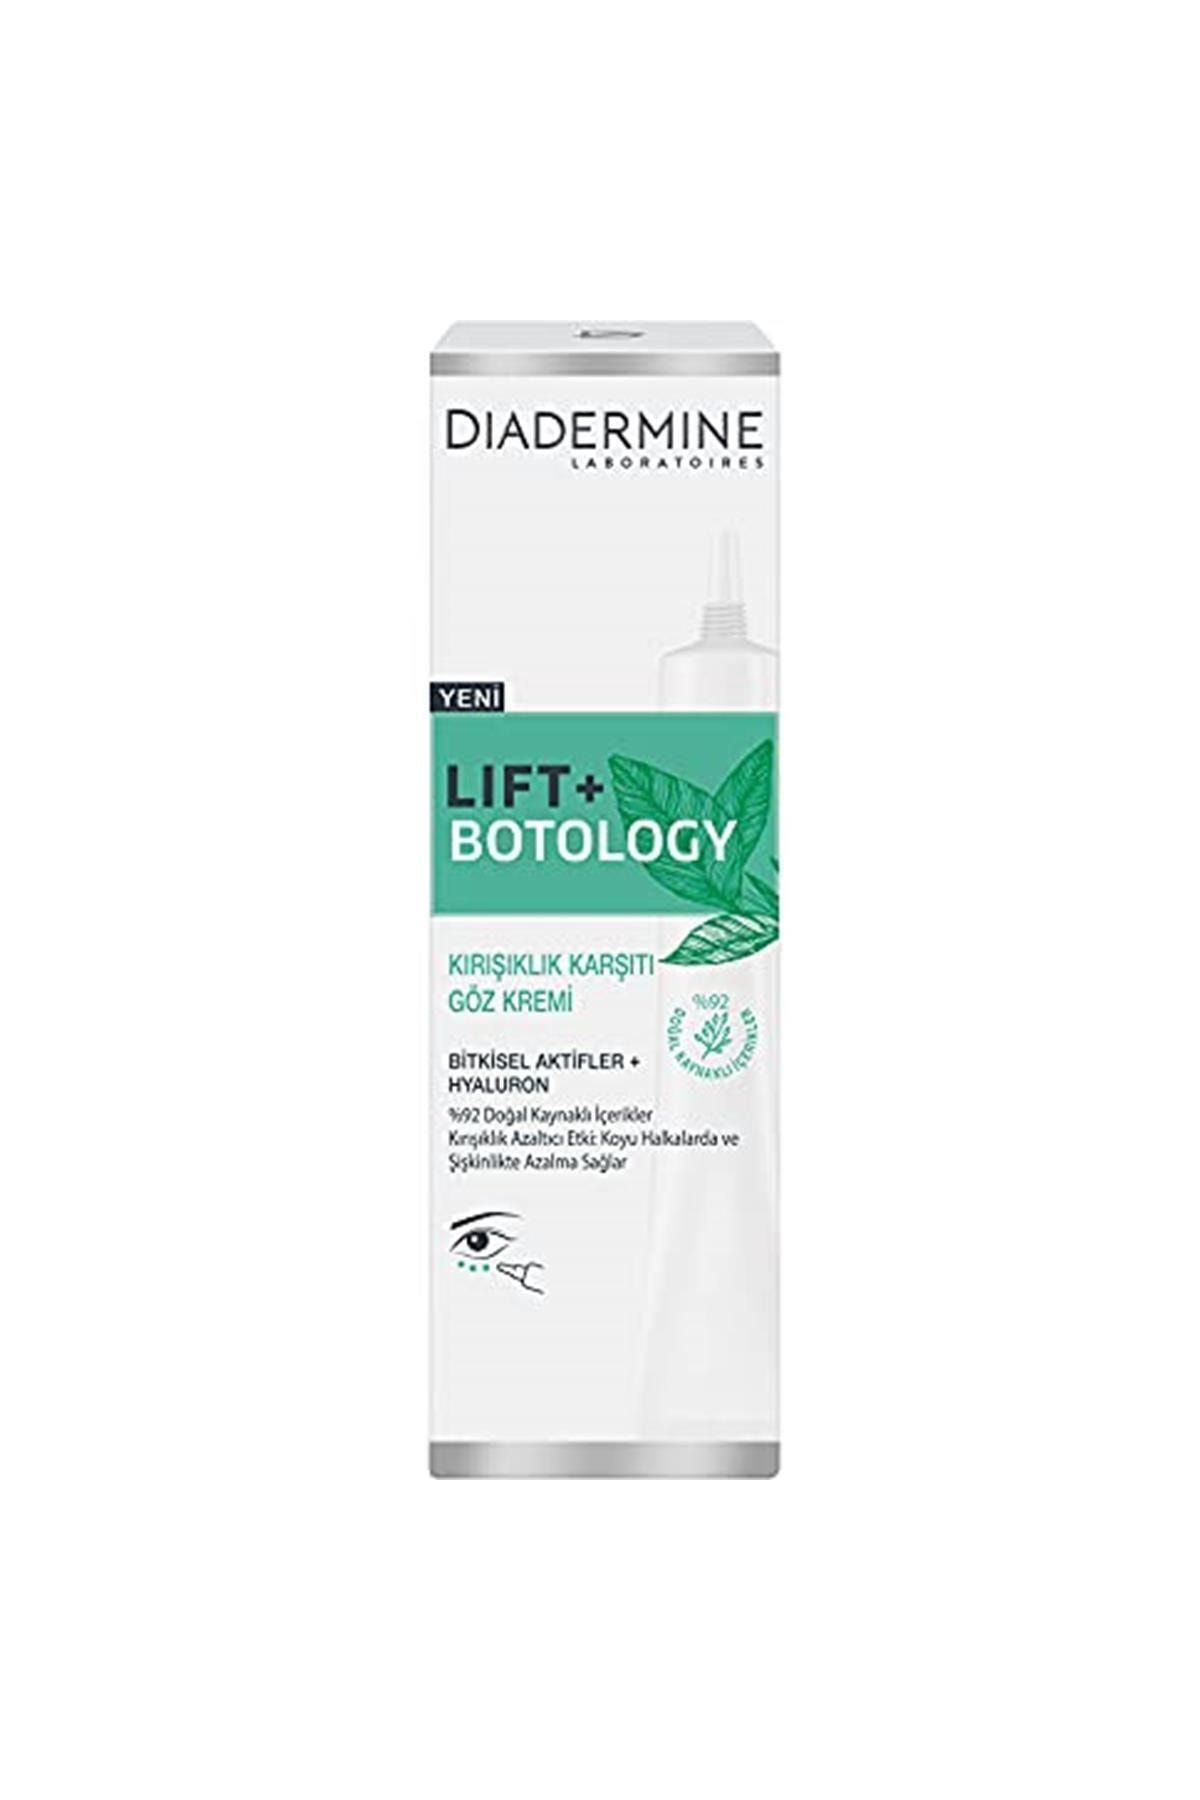 Diadermine Marka: Lift + Botology Kırışıklık Karşıtı Göz Kremi Kategori: Yüz Kremi